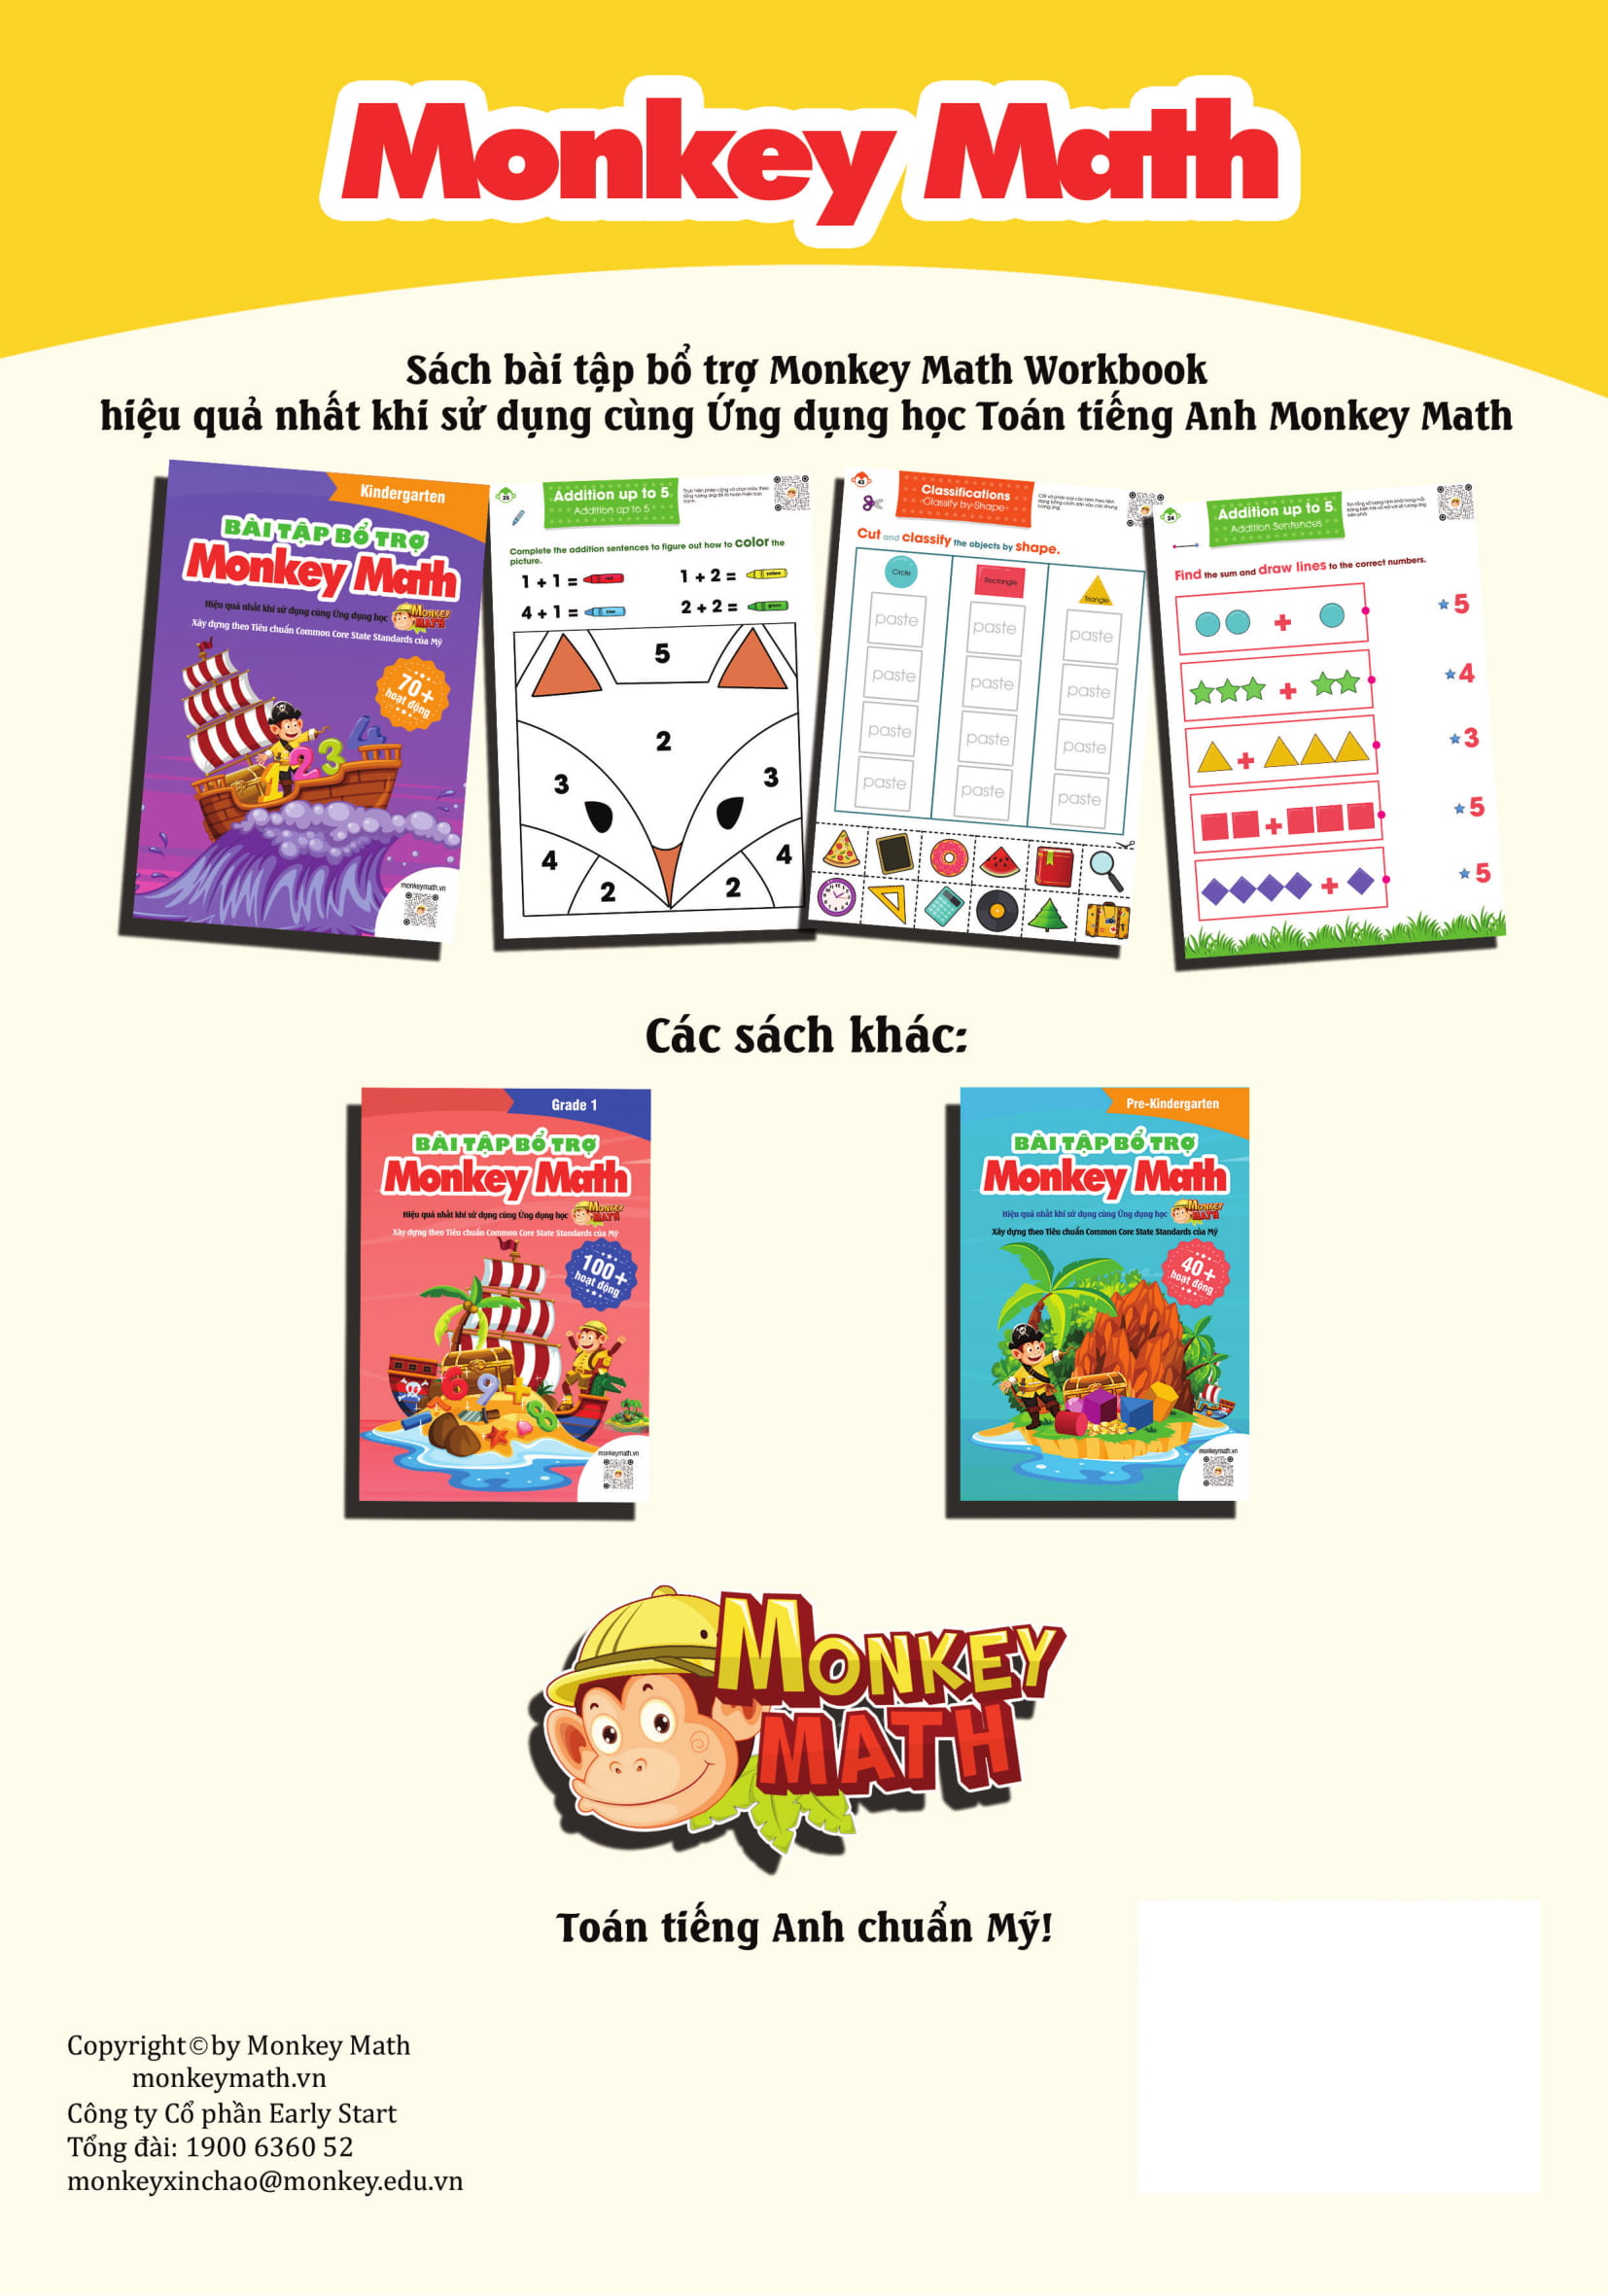 Bài tập bổ trợ Monkey Math - Kindergarten